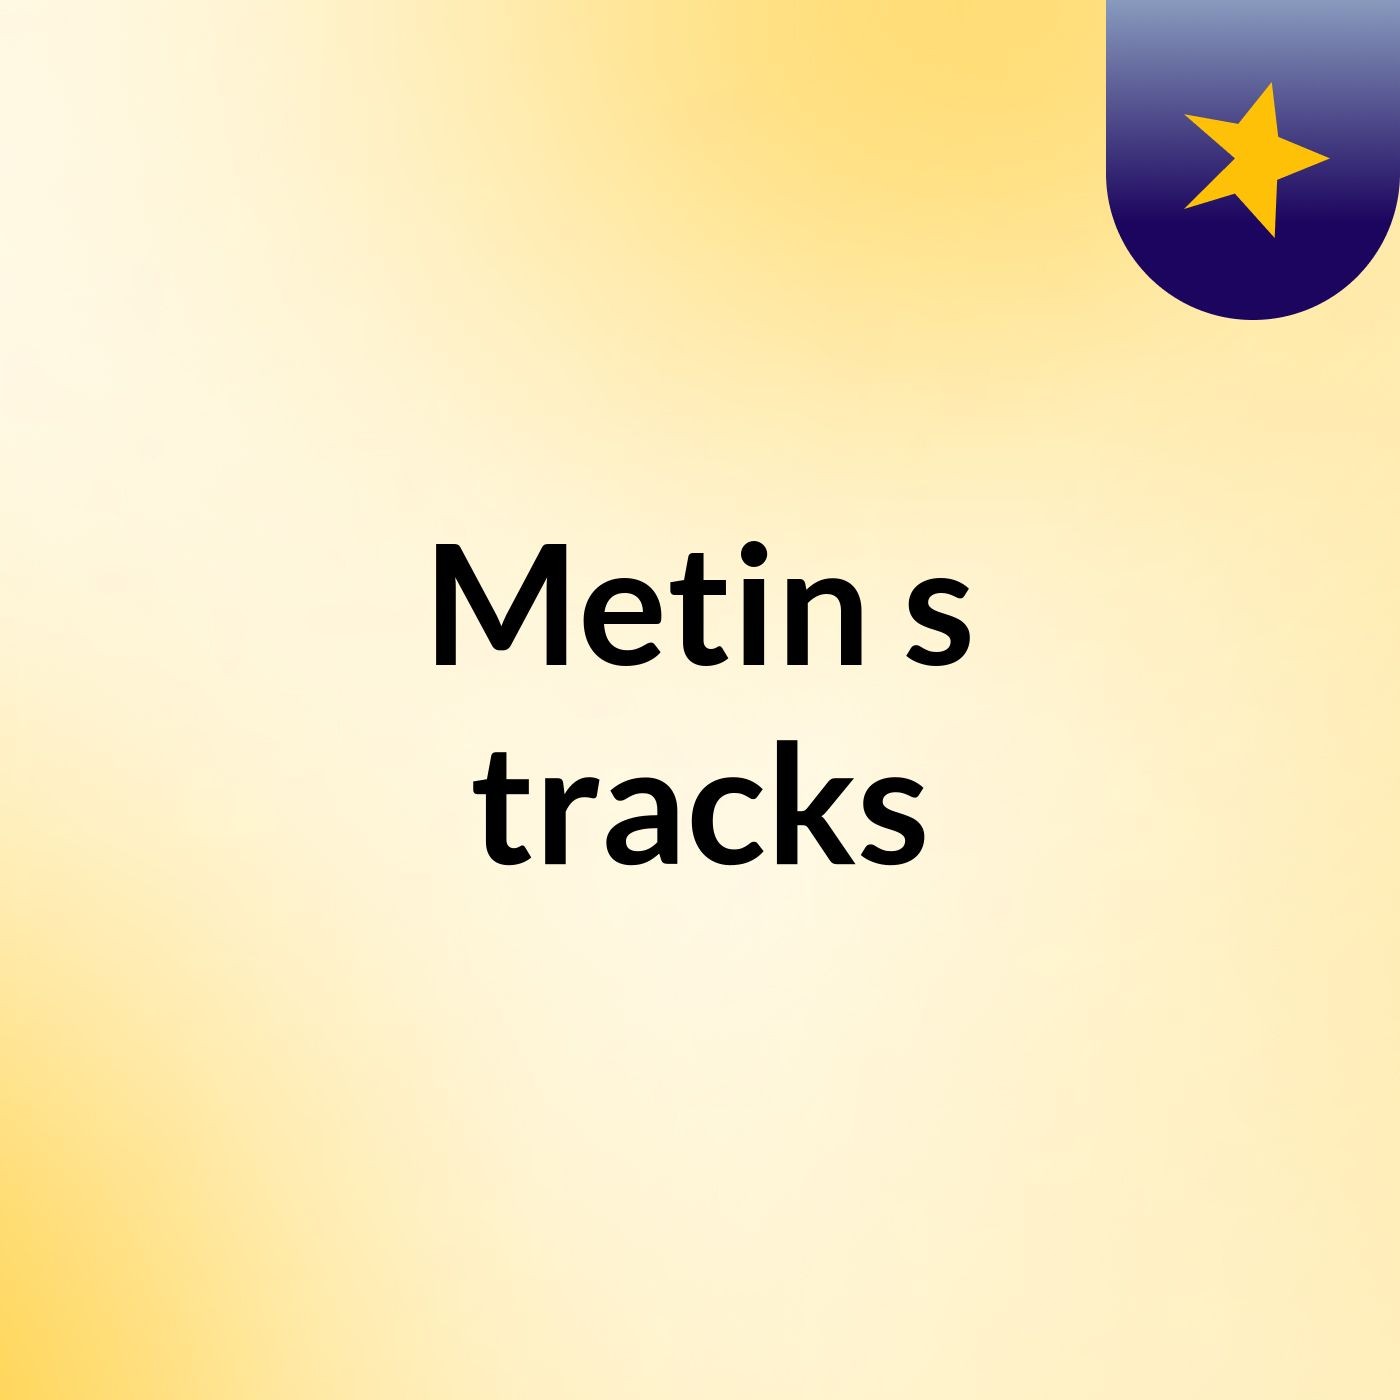 Metin's tracks